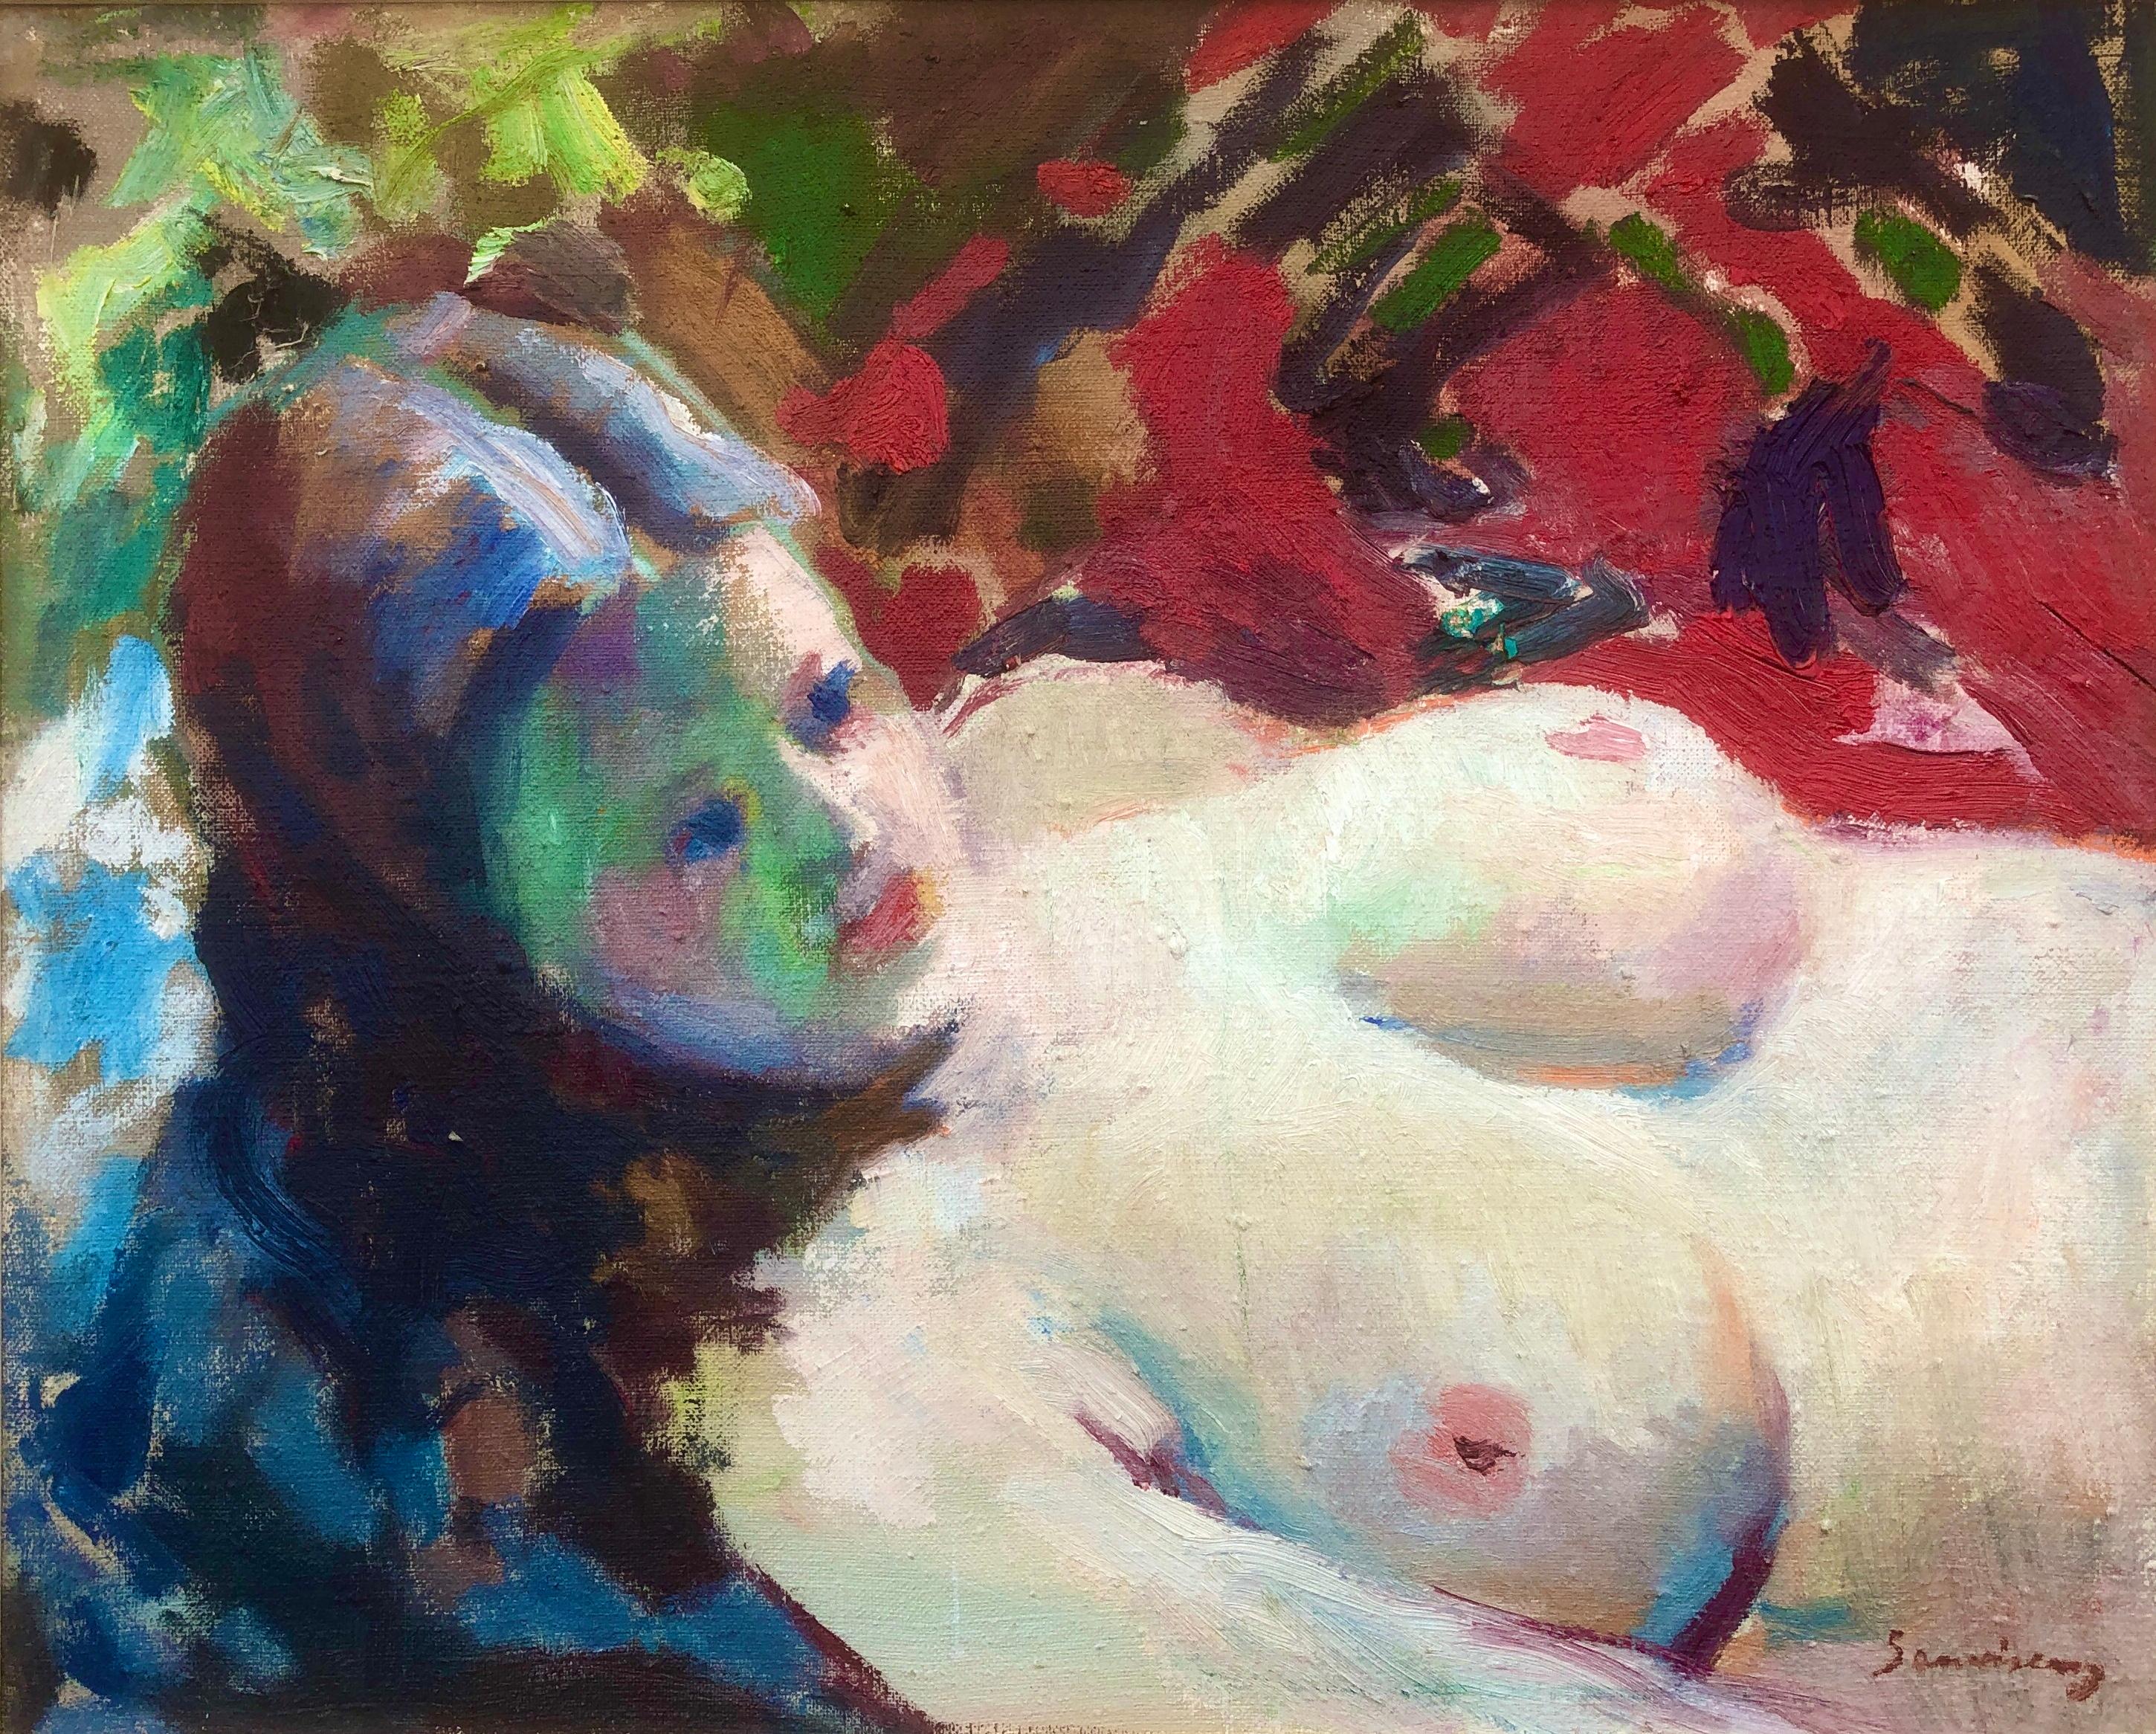 Nude Painting Ramon Sanvisens Marfull - Femme nue huile sur toile